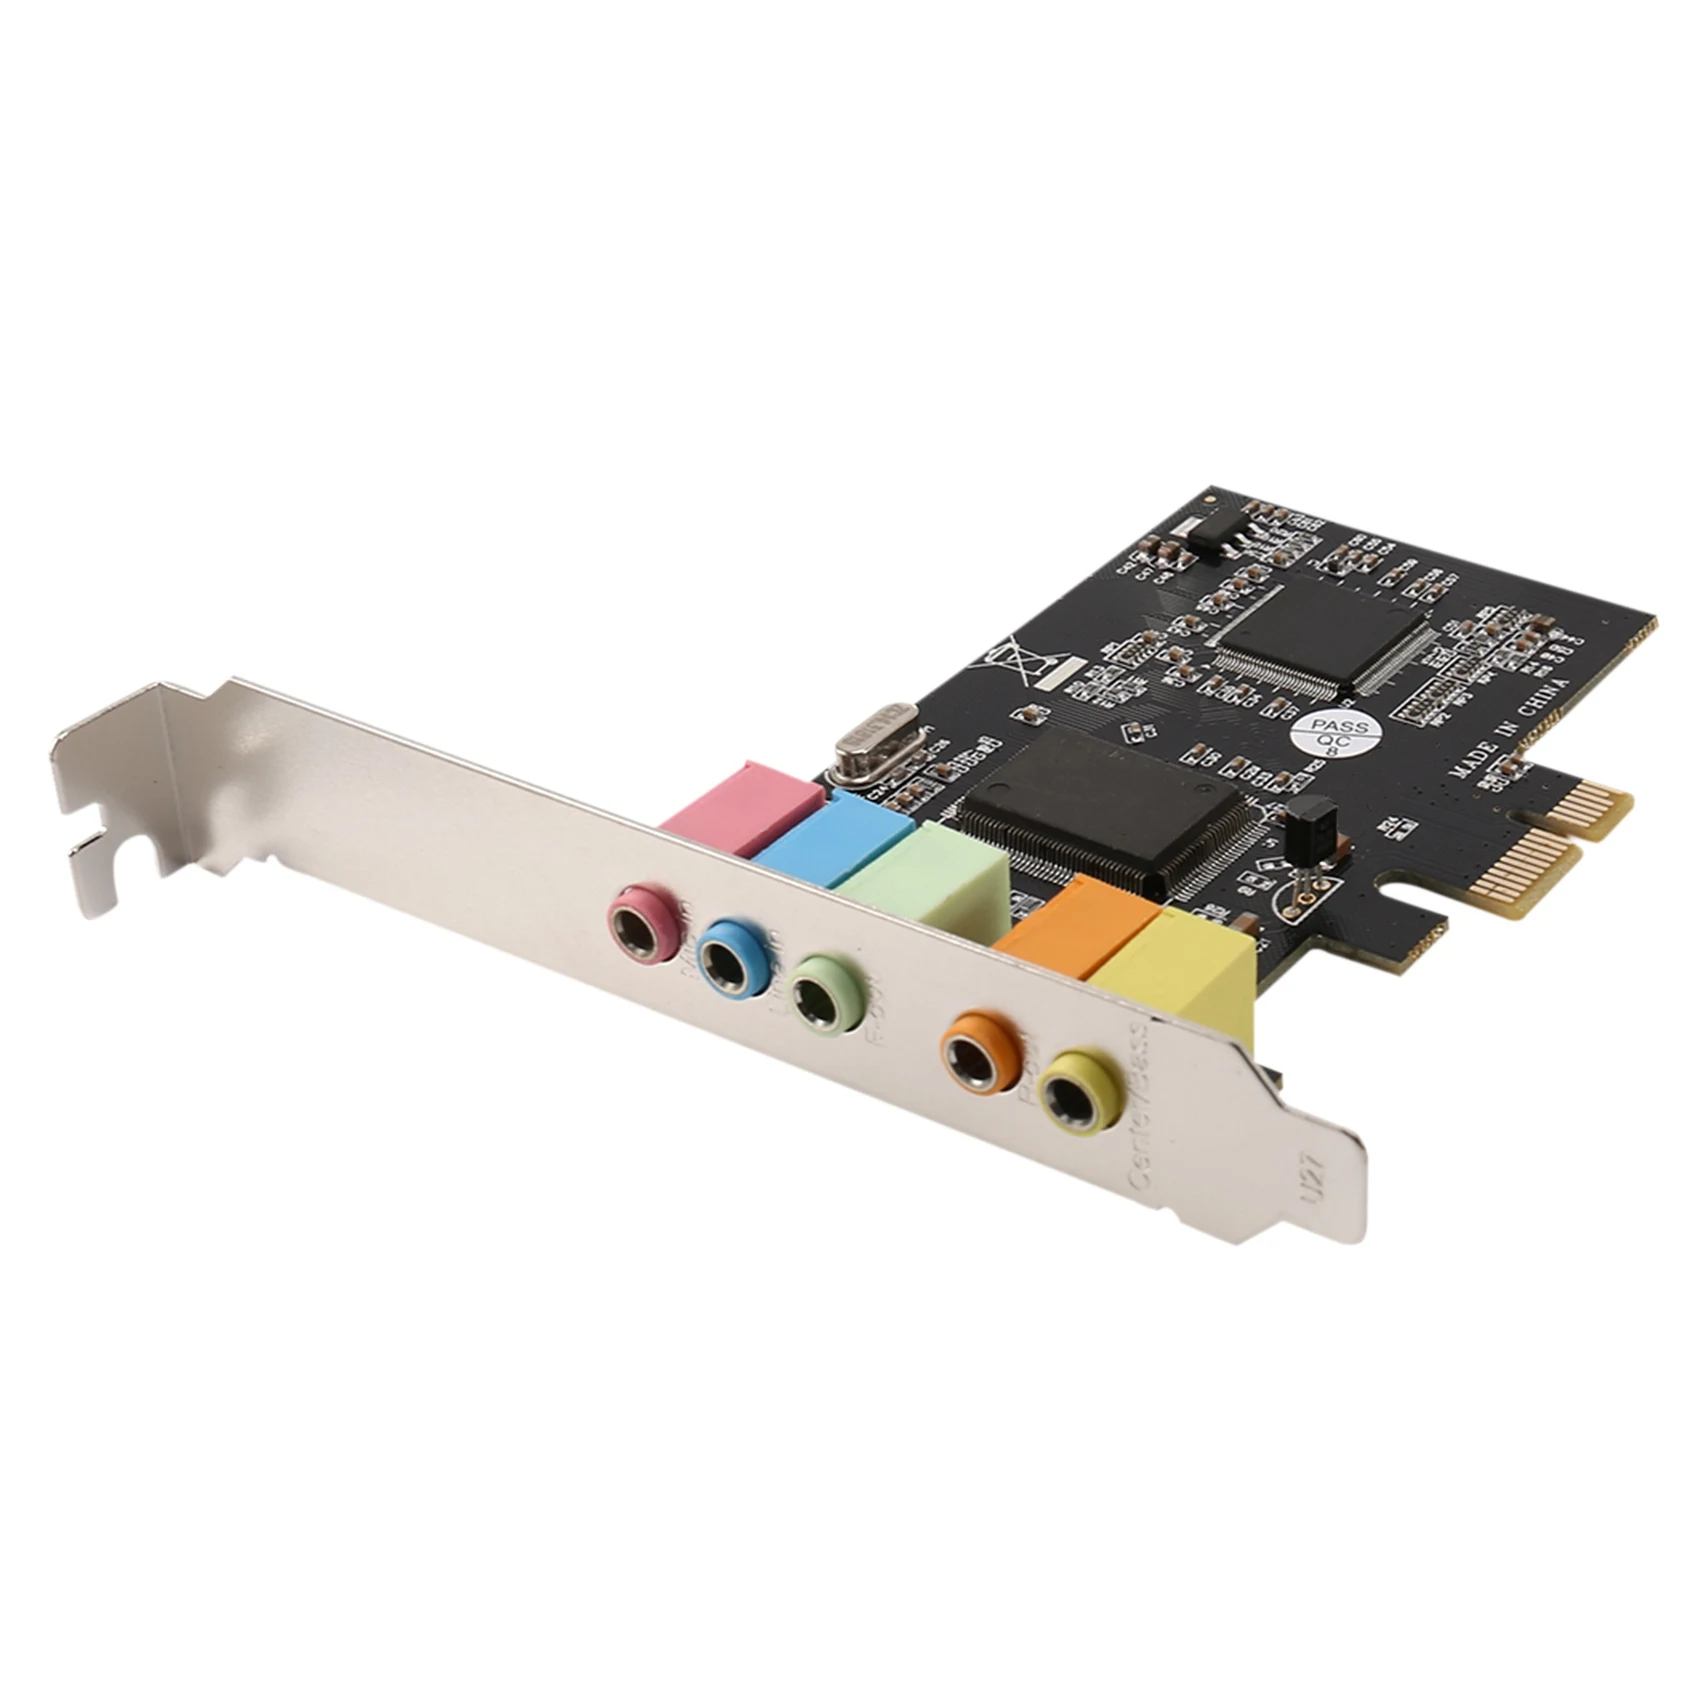 

PCIe Sound Card PCI-E X1 CMI8738 Chip 32/64 Bit Sound Card Stereo 5.1 Channel Desktop Built-in Sound Card for PC